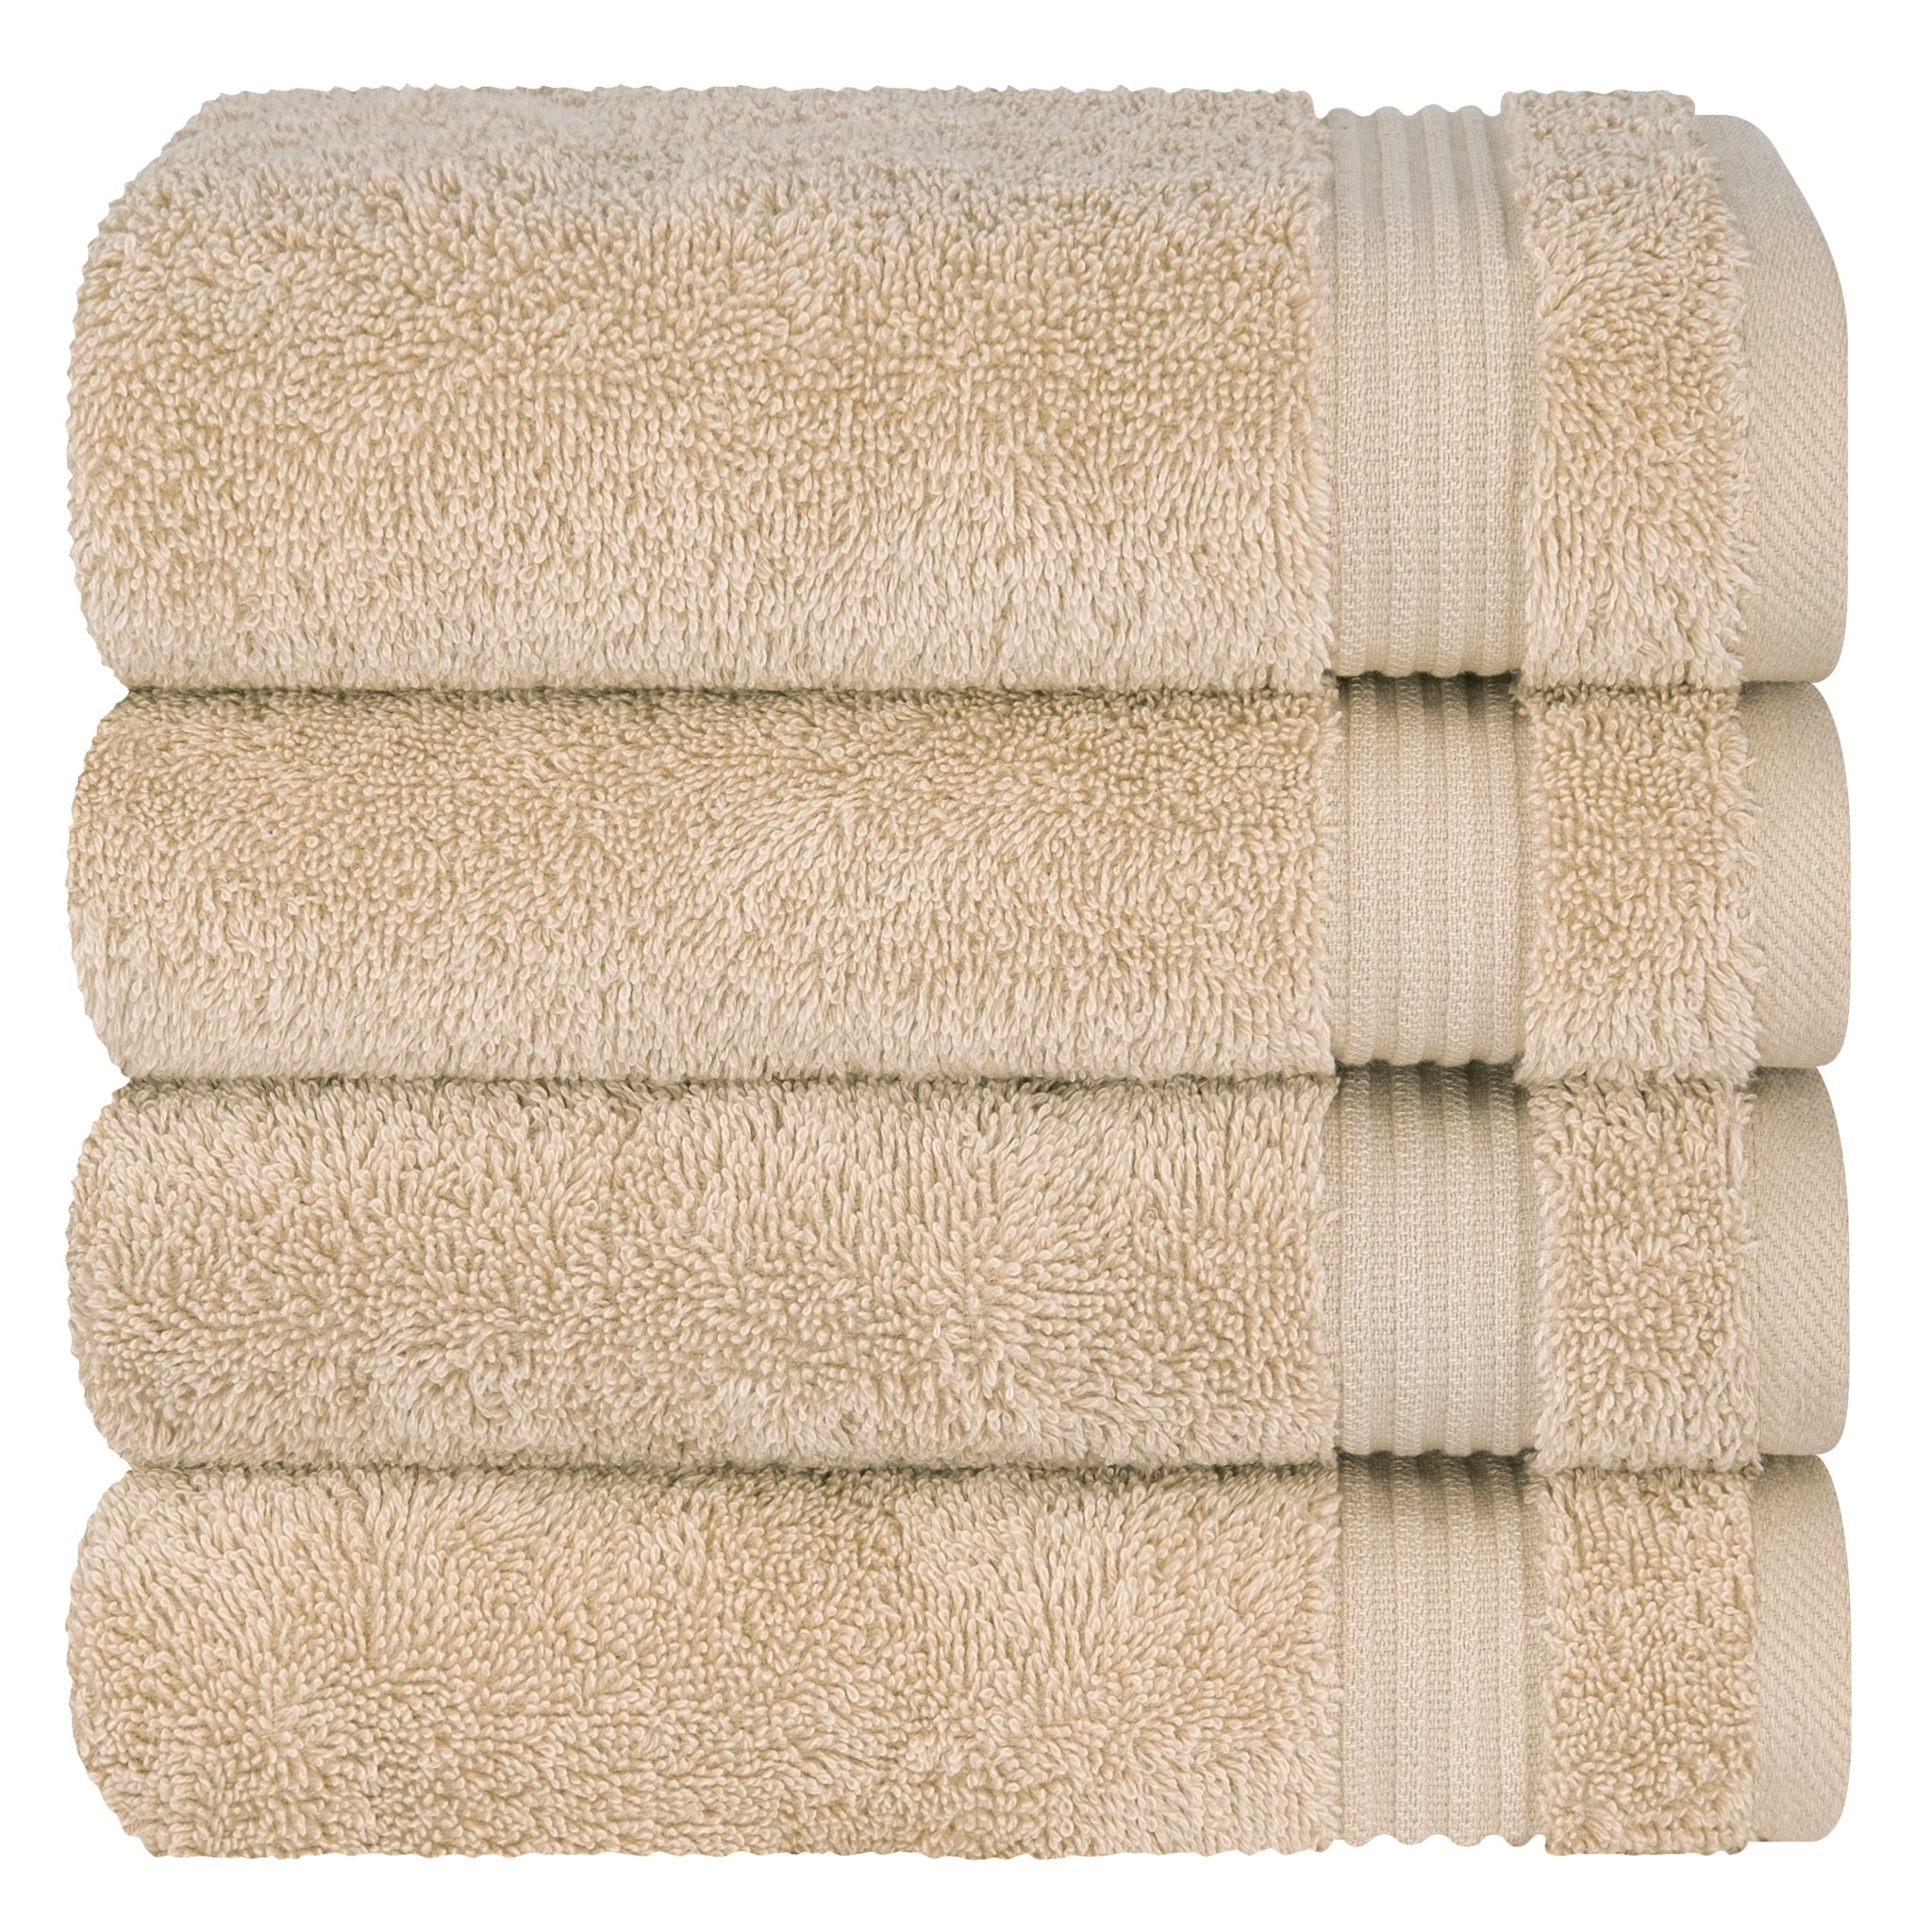 American Soft Linen Bekos 100% Cotton Turkish Towels, 4 Piece Hand Towel Set -sand-taupe-05